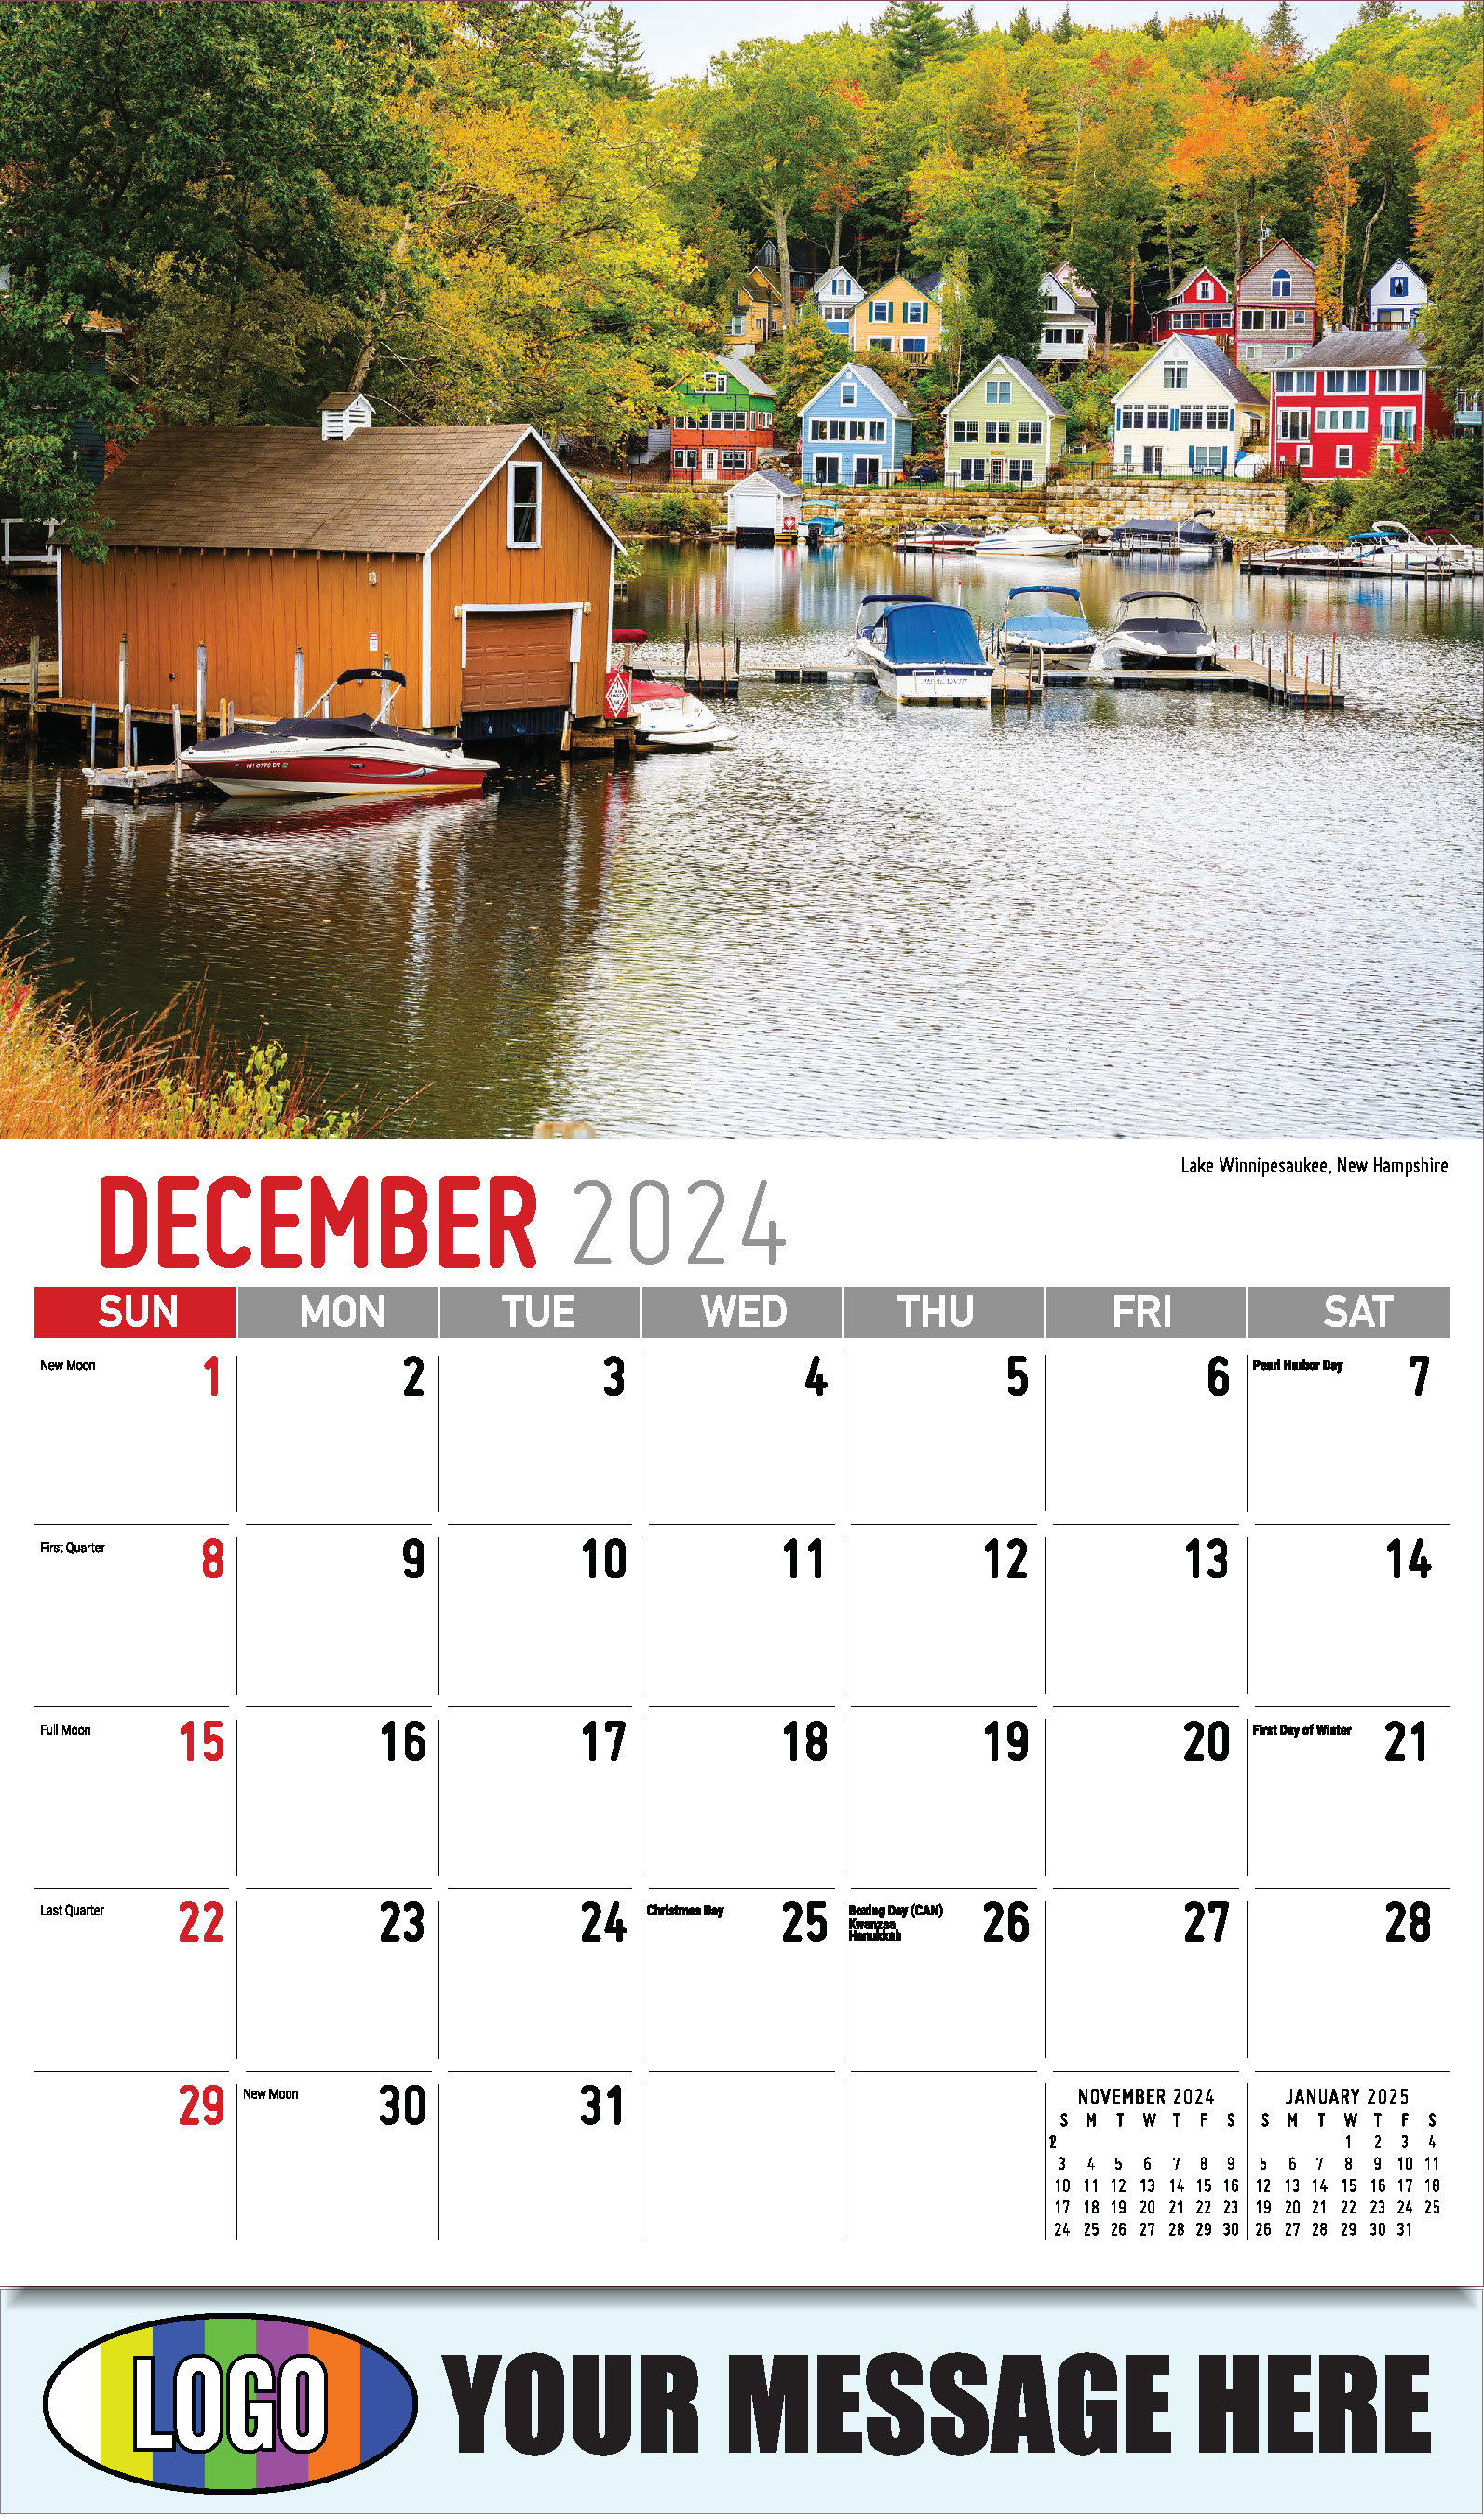 Scenes of America 2025 Business Advertising Wall Calendar - December_a